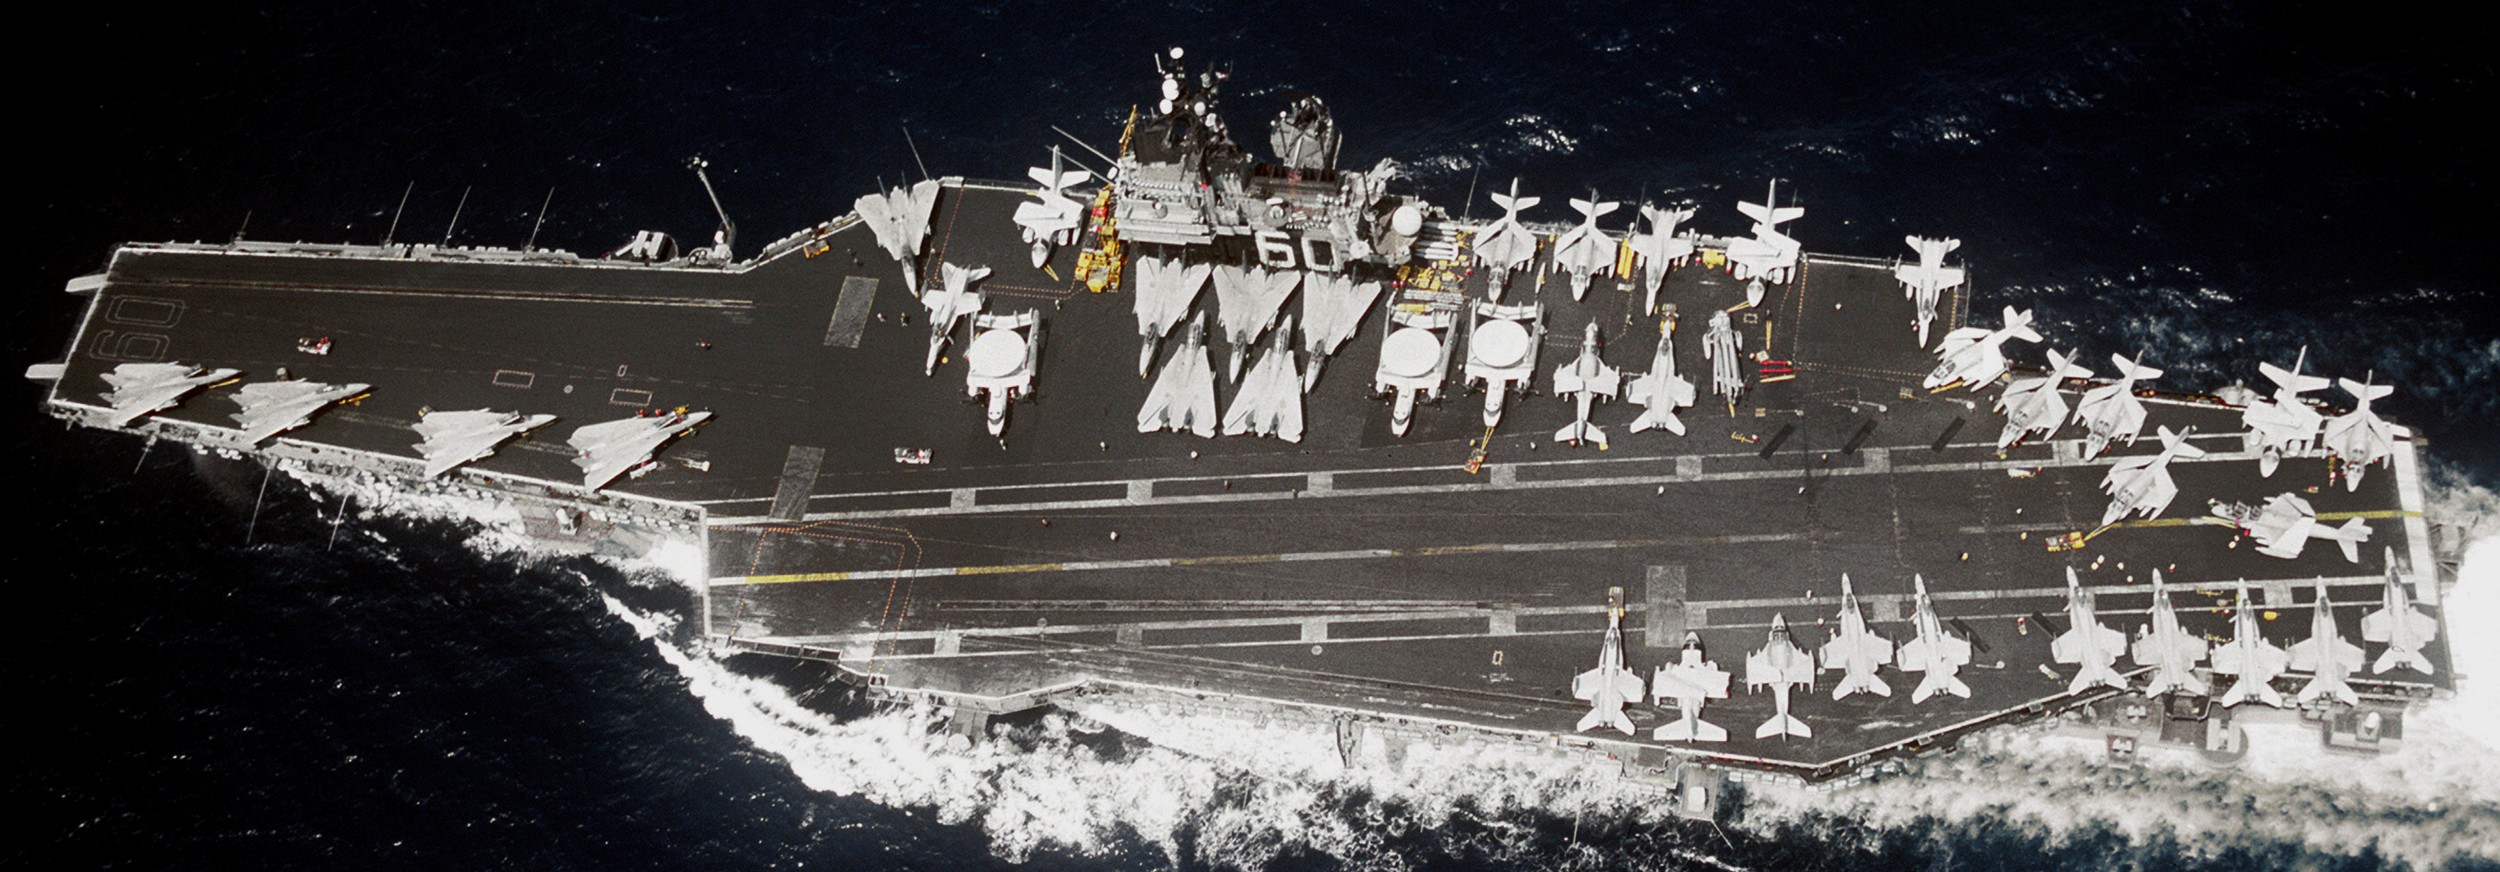 cv-60 uss saratoga forrestal class aircraft carrier air wing cvw-17 us navy adriatic sea 1992 130